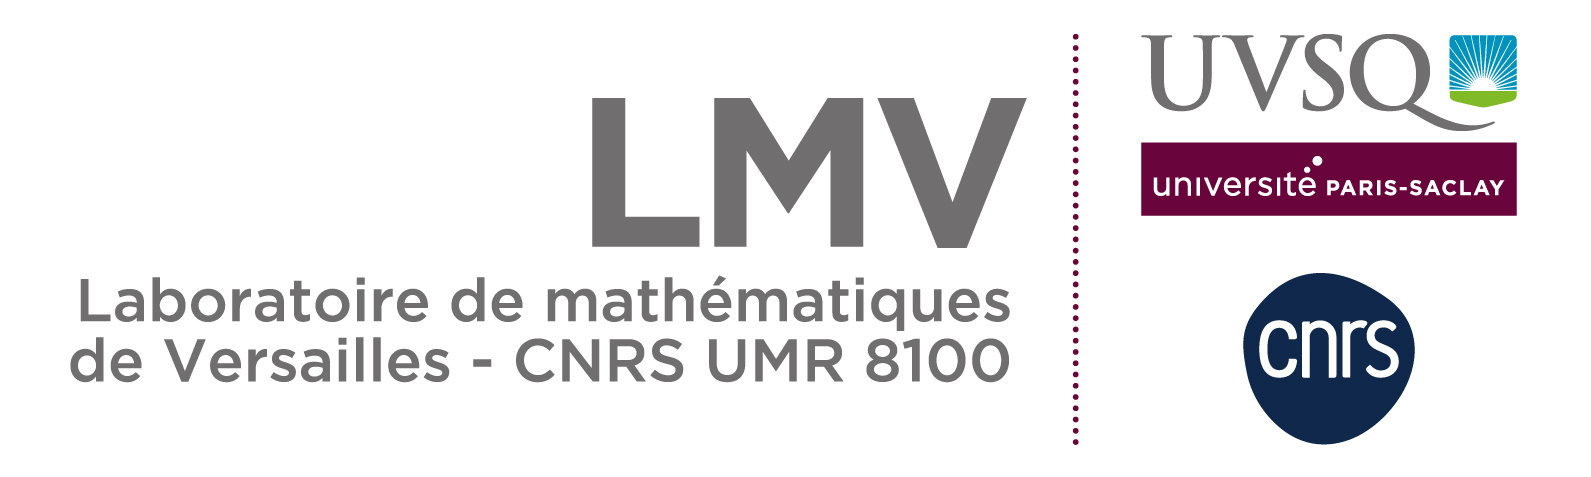 logo du laboratoire LMV de l'UVSQ